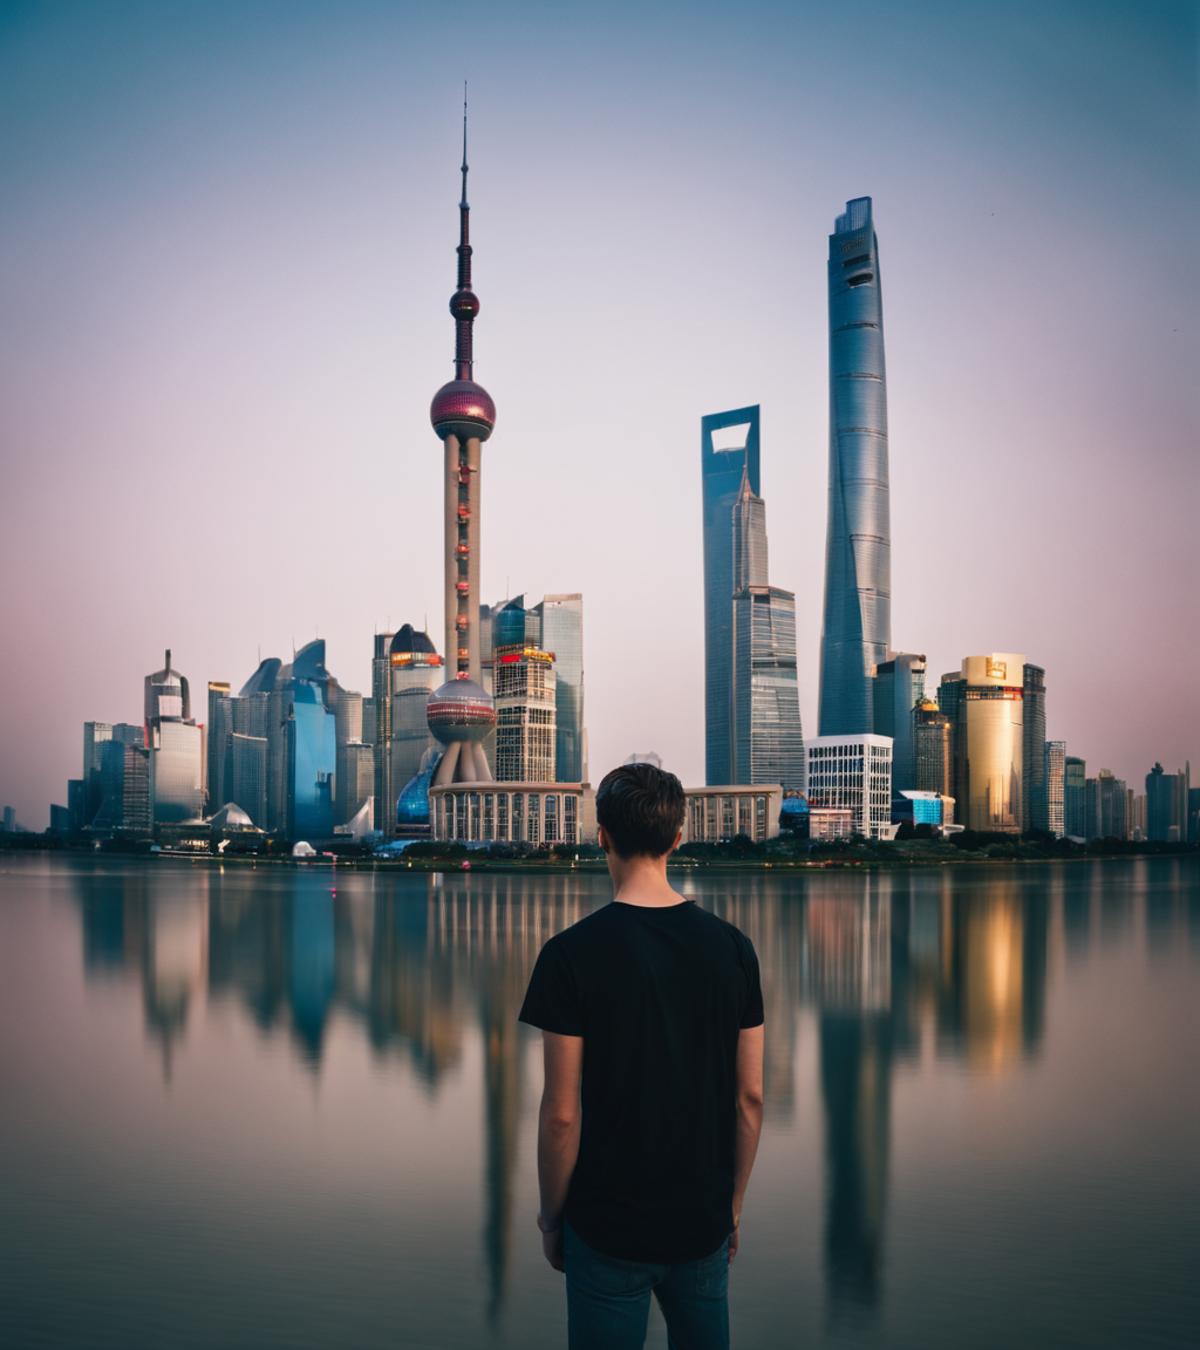 Shanghai skyline 上海外滩 image by Explatord